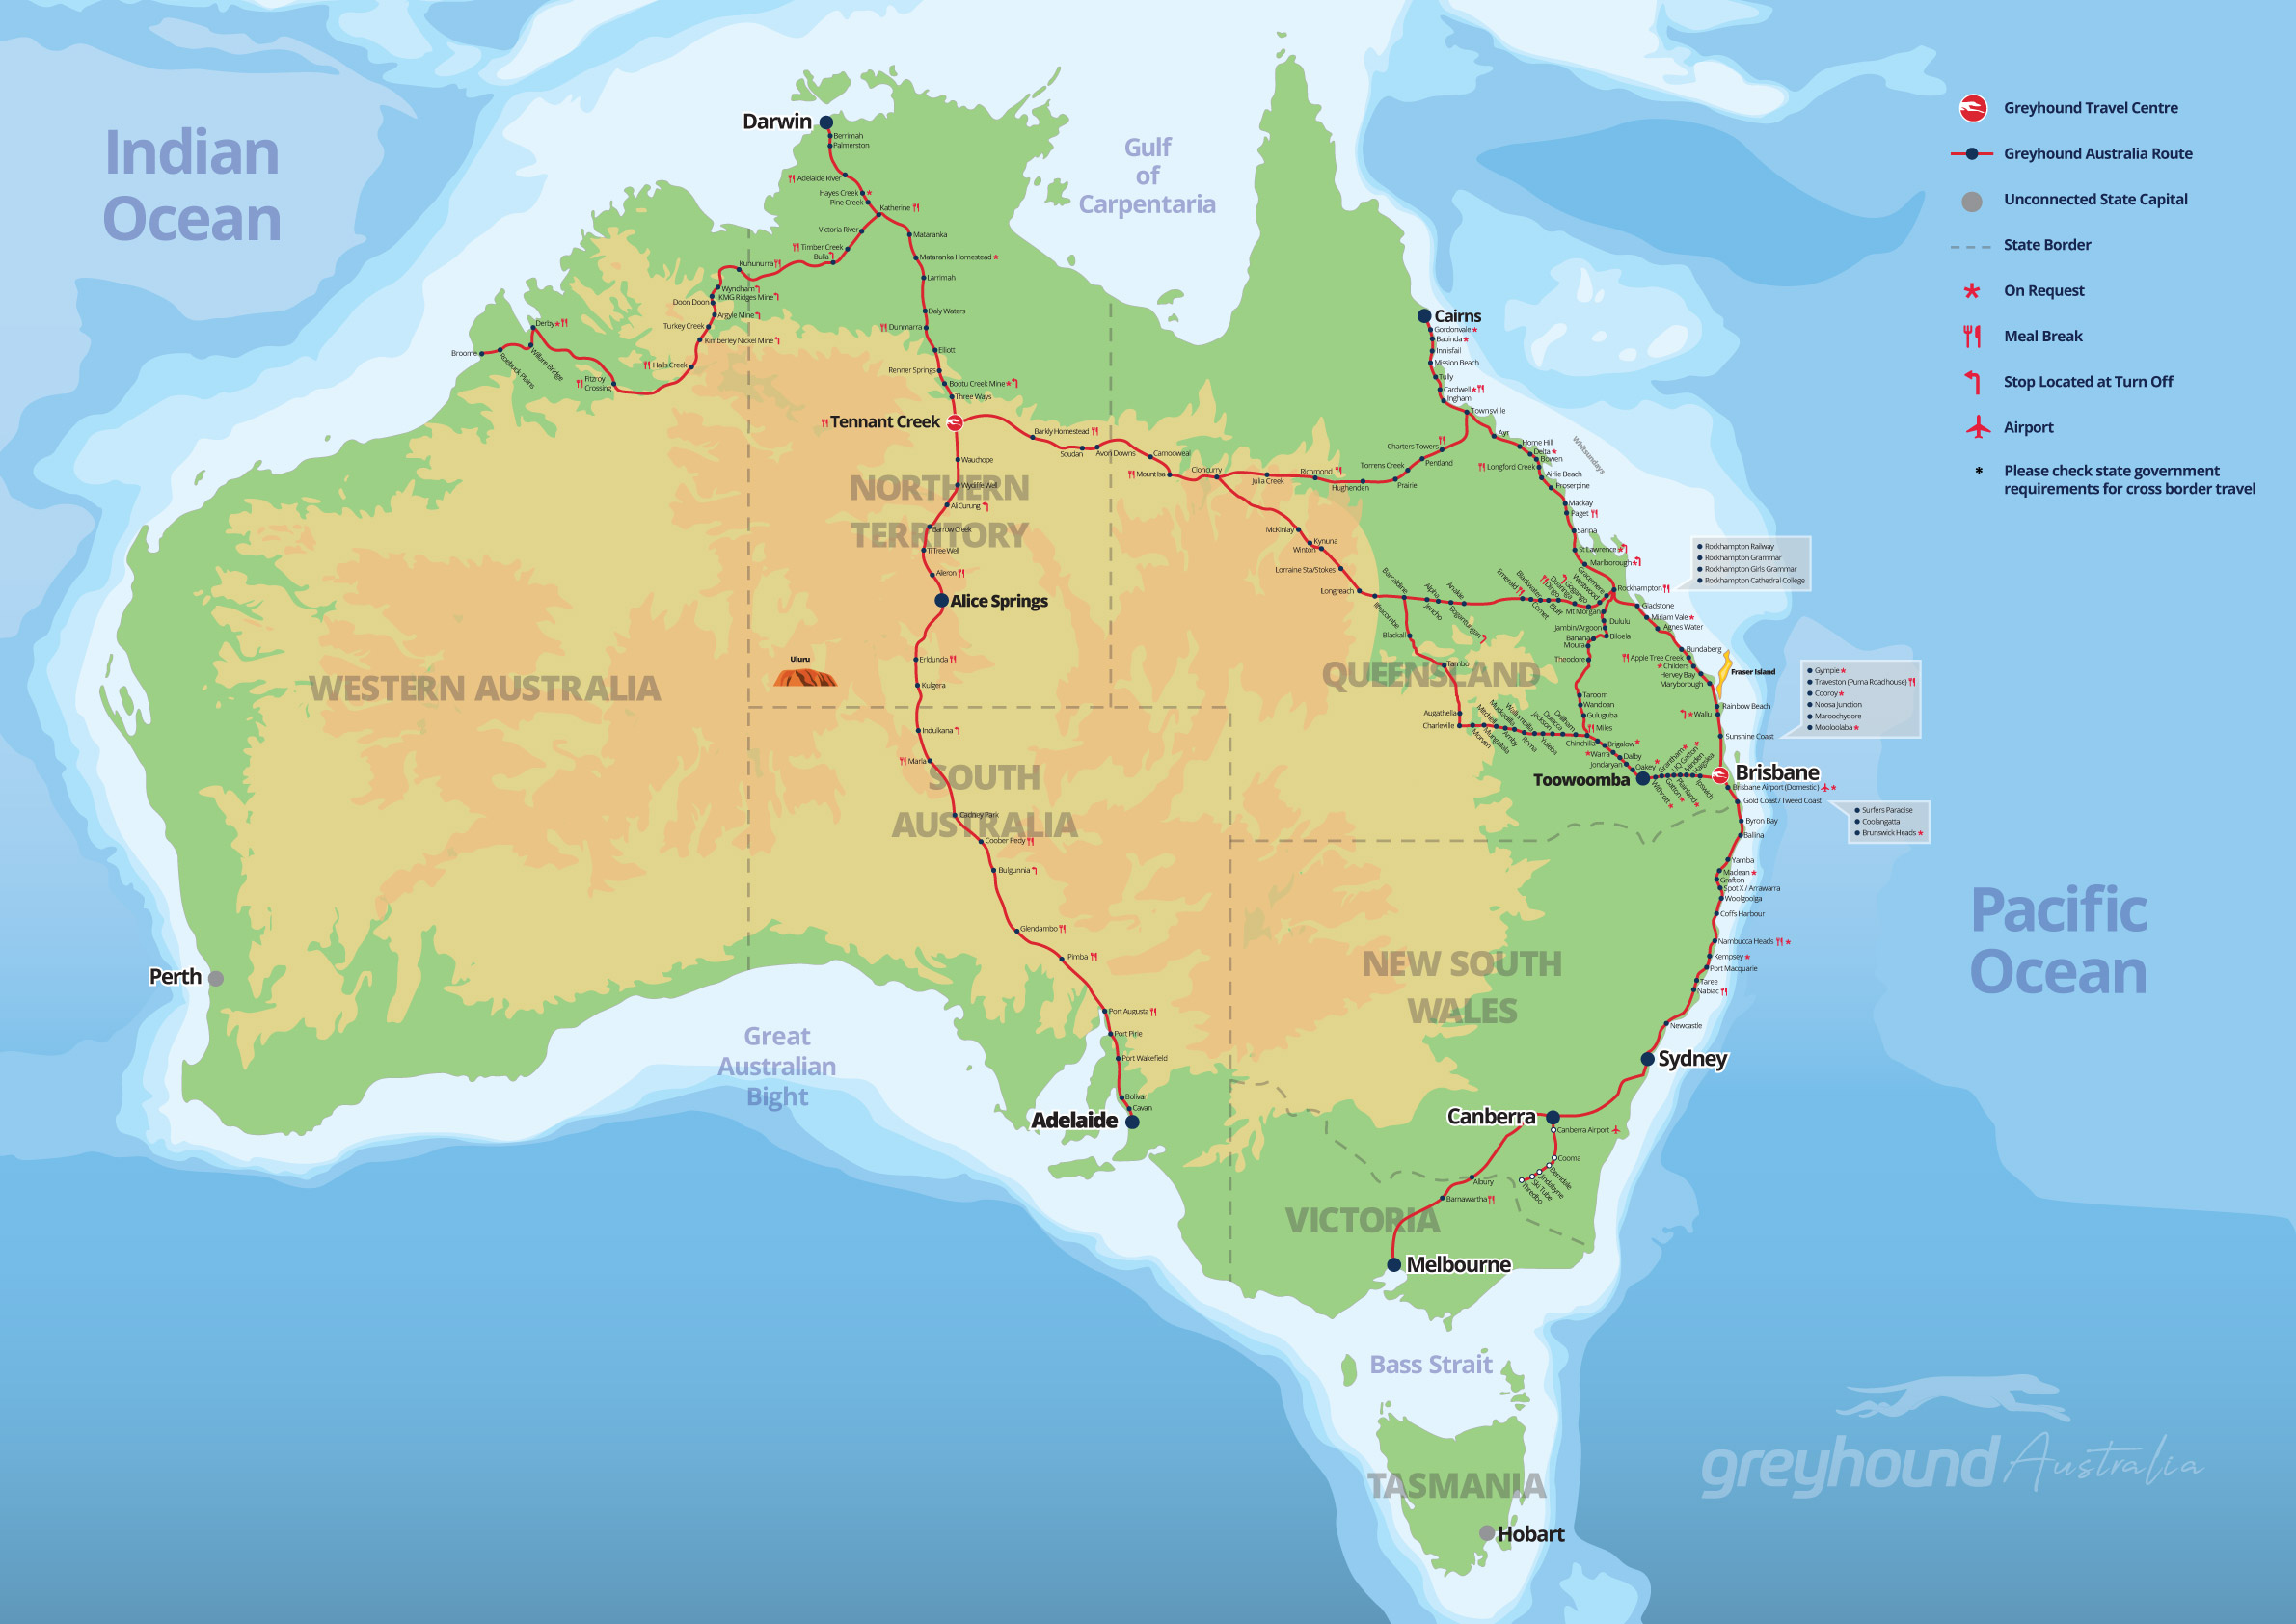 Greyhound Australia Network Map - effective 29 April 2022